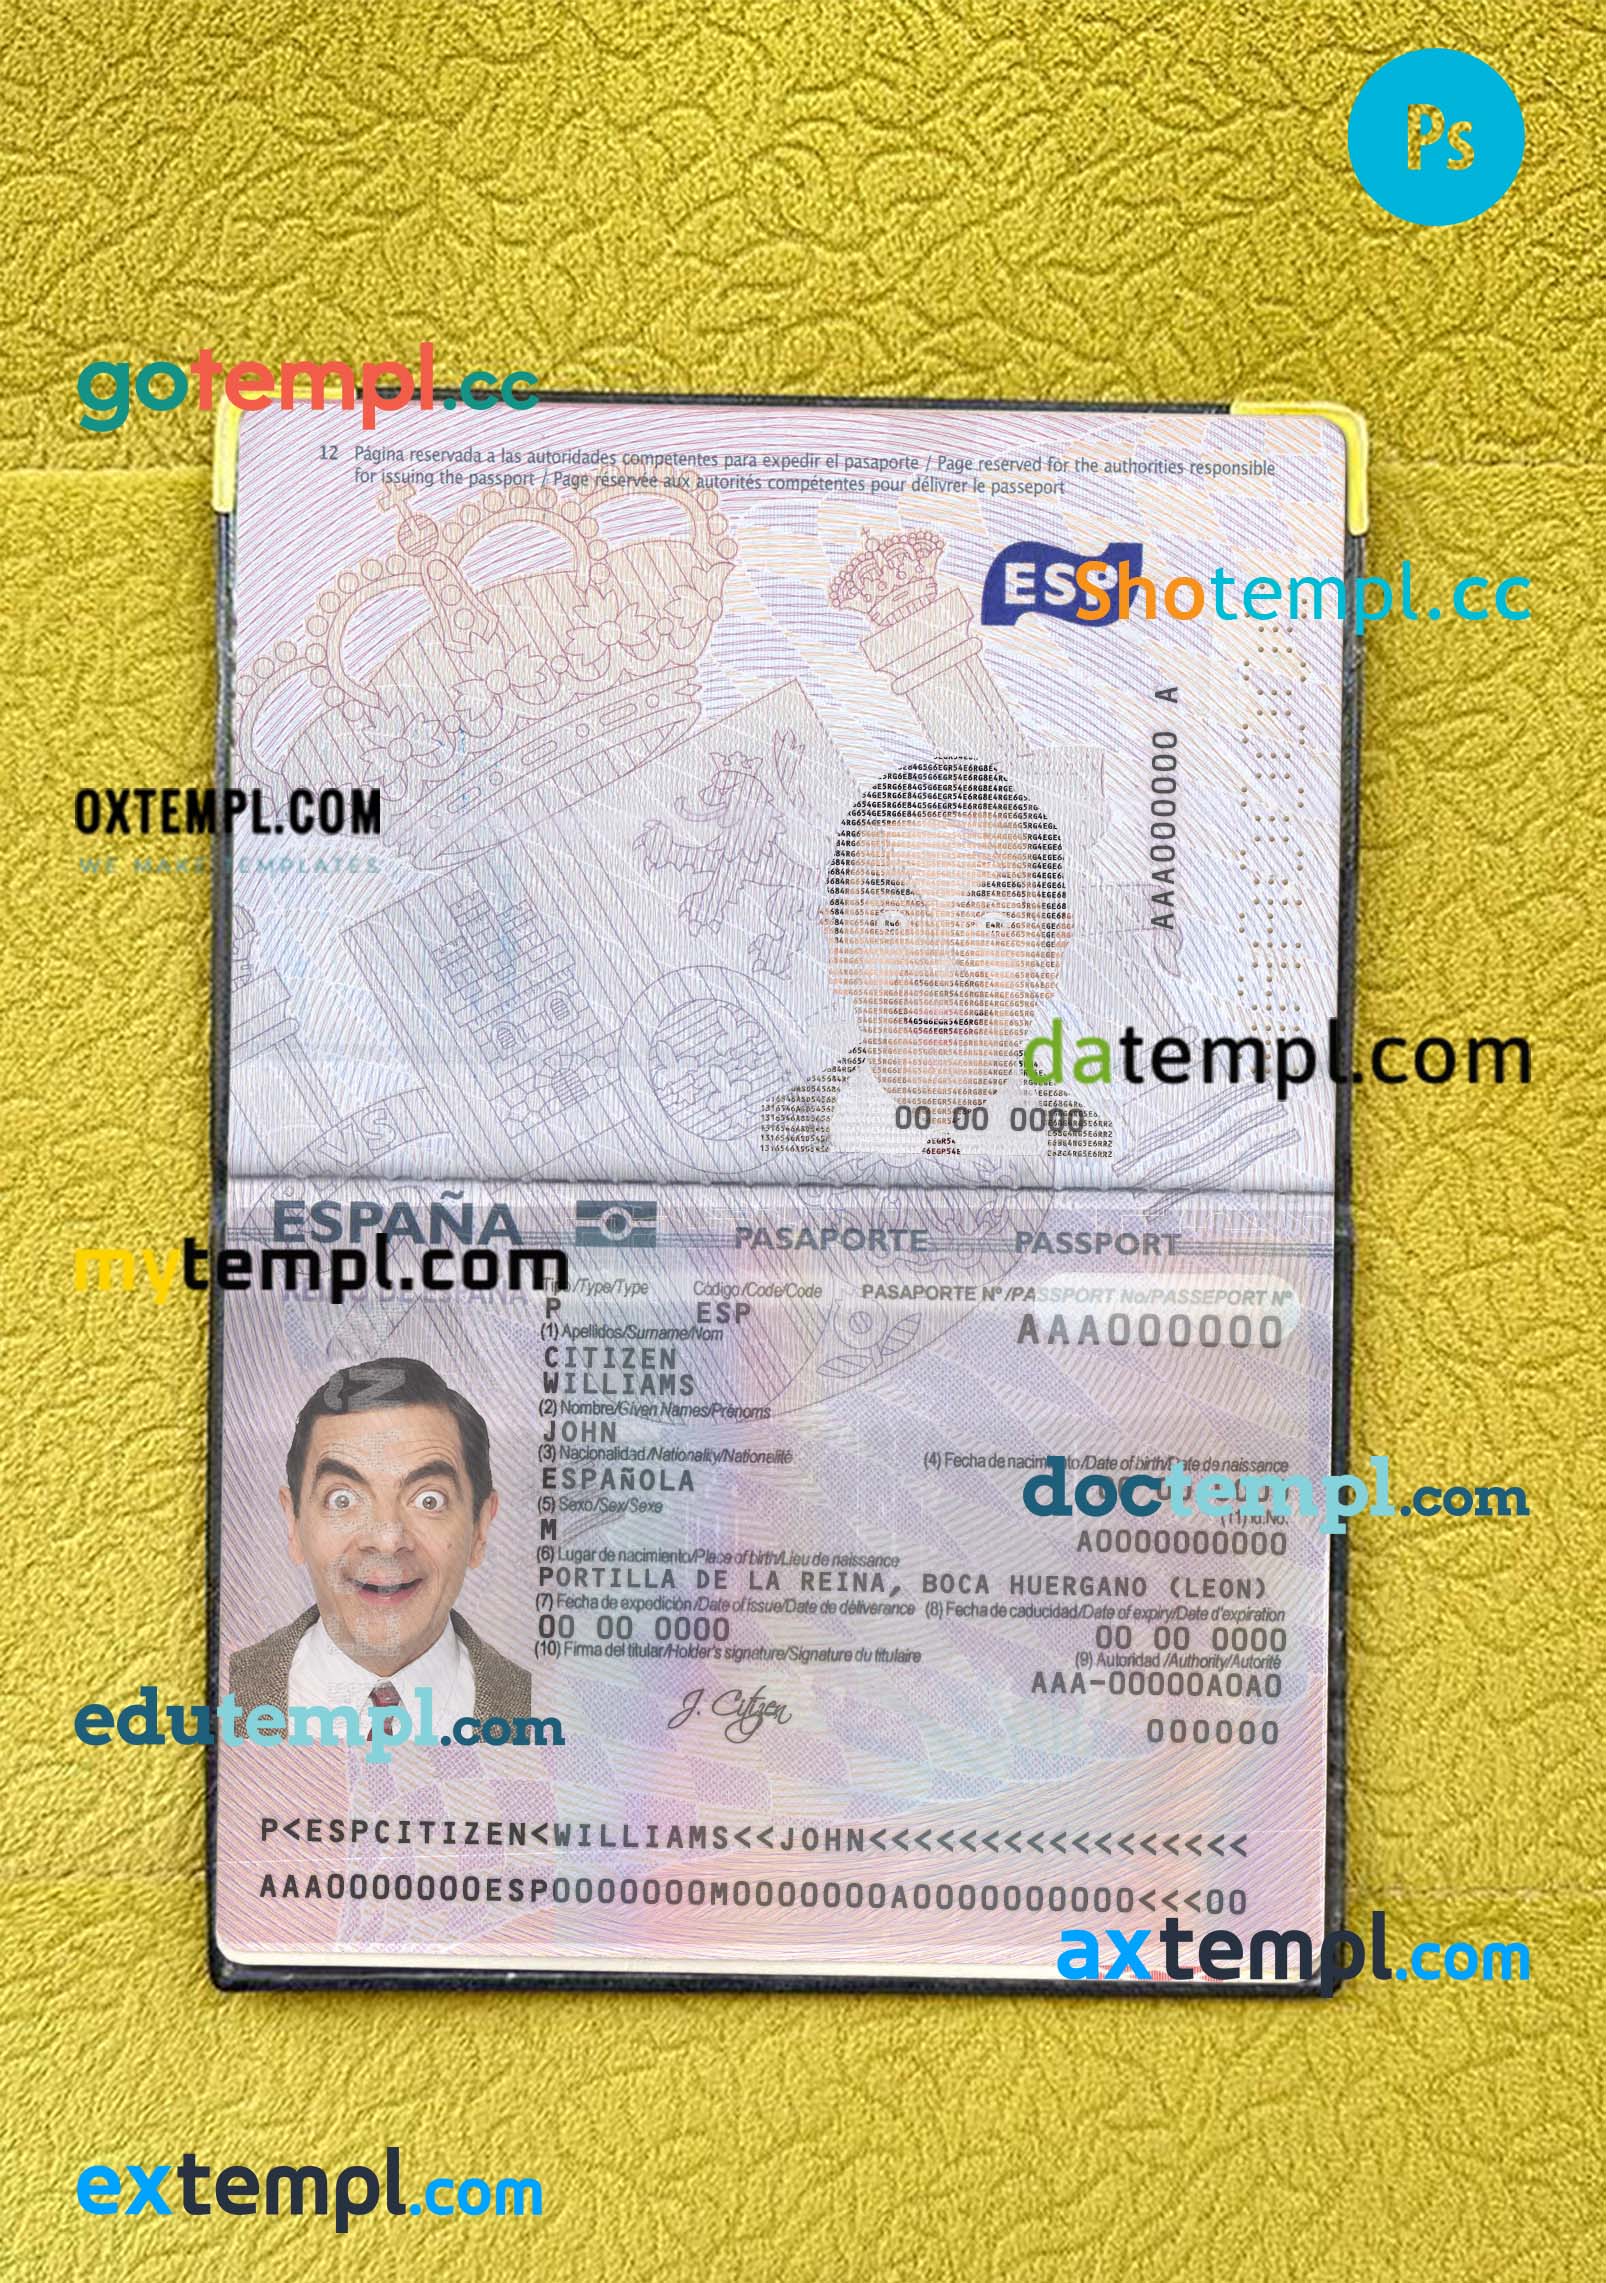 South Korea BNK bank visa classic card, fully editable template in PSD format